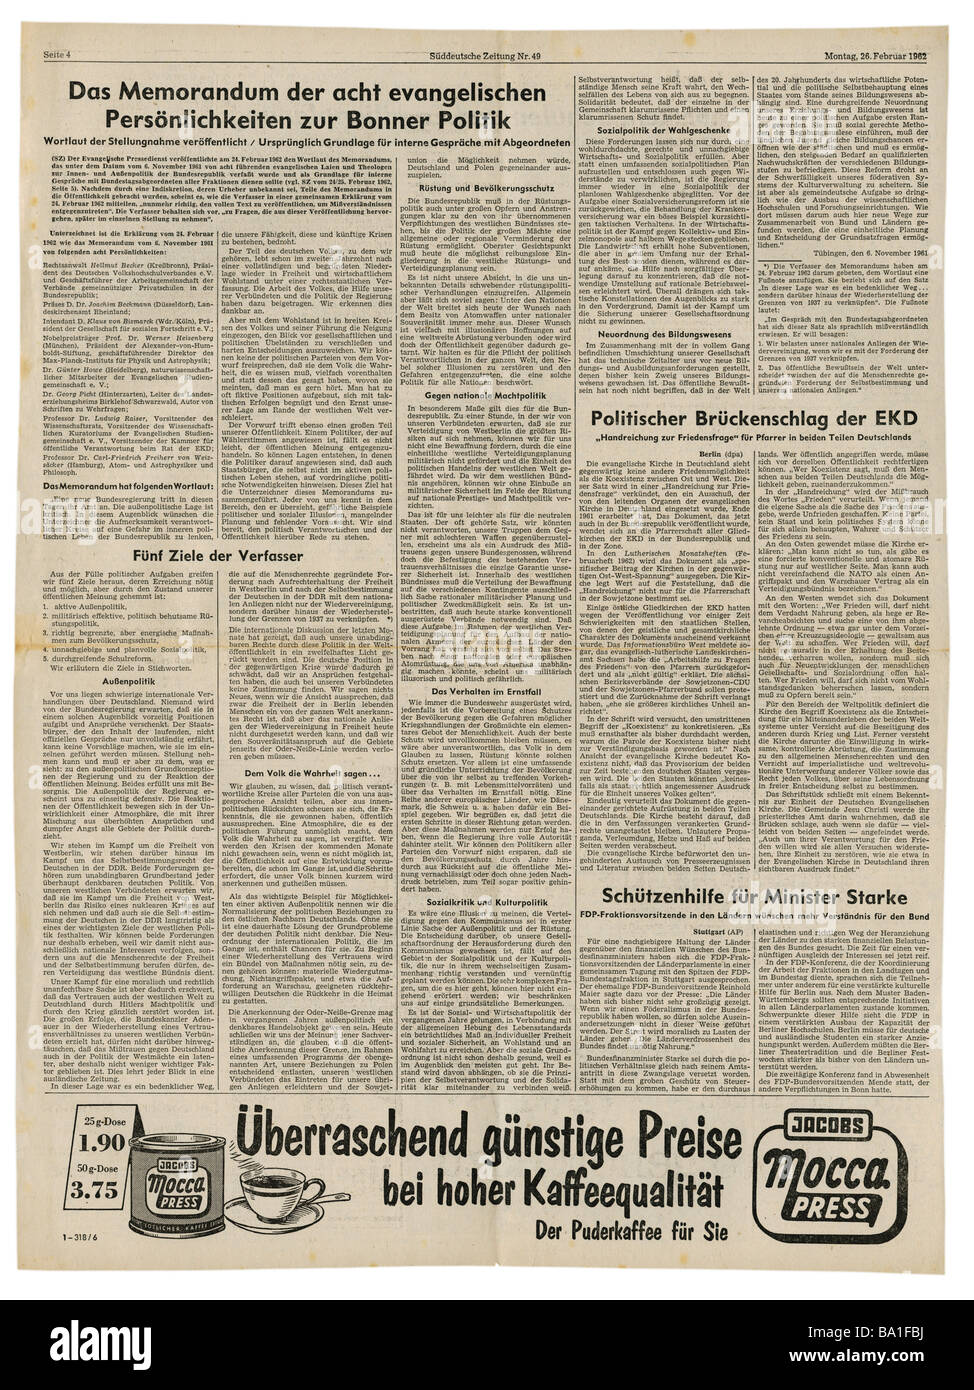 press/media, magazines, 'Süddeutsche Zeitung', Munich, 18 volume, number 49, Monday 26.2.1962, article, eight protestant notabilities submitting memorandum on German policy, Stock Photo